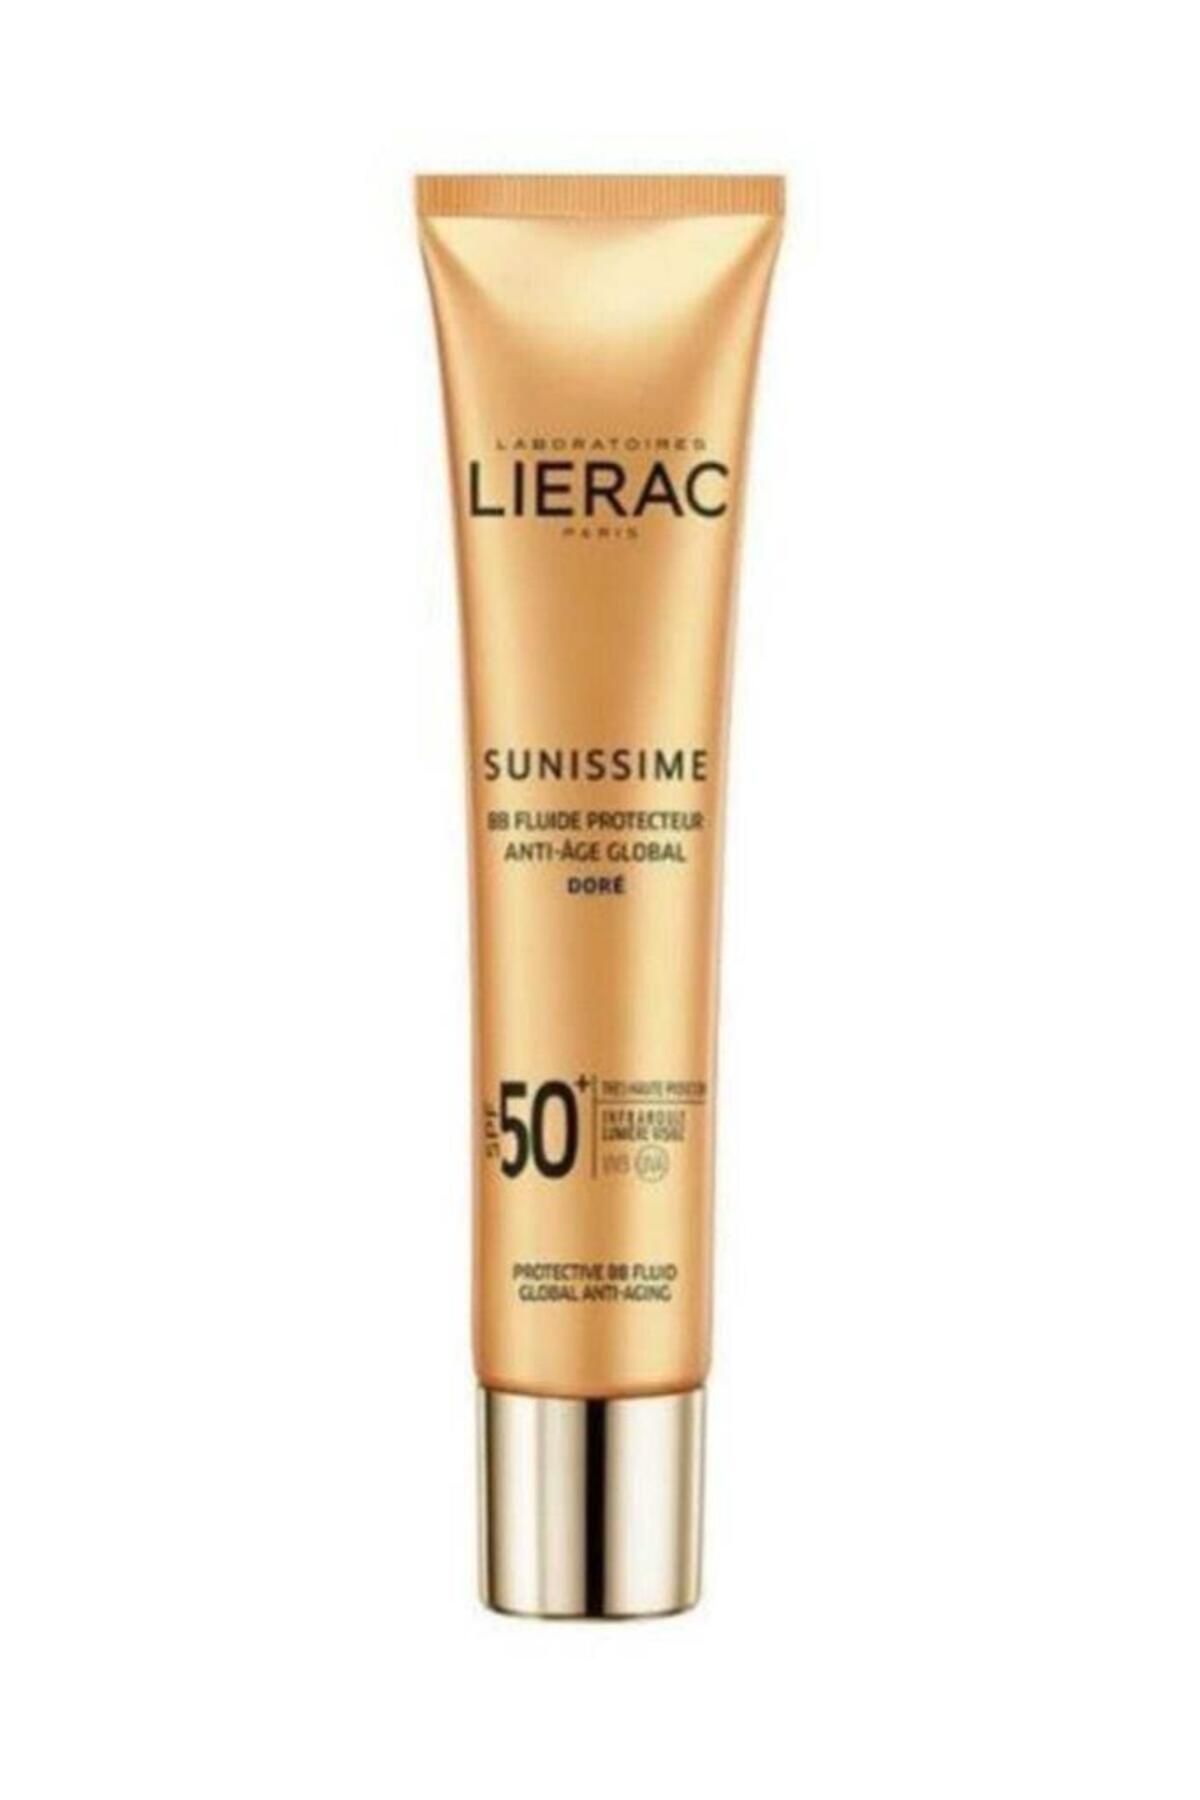 Lierac Sunissime Protective Bb Fluid Global Anti-aging Spf50 40 Ml - Golden